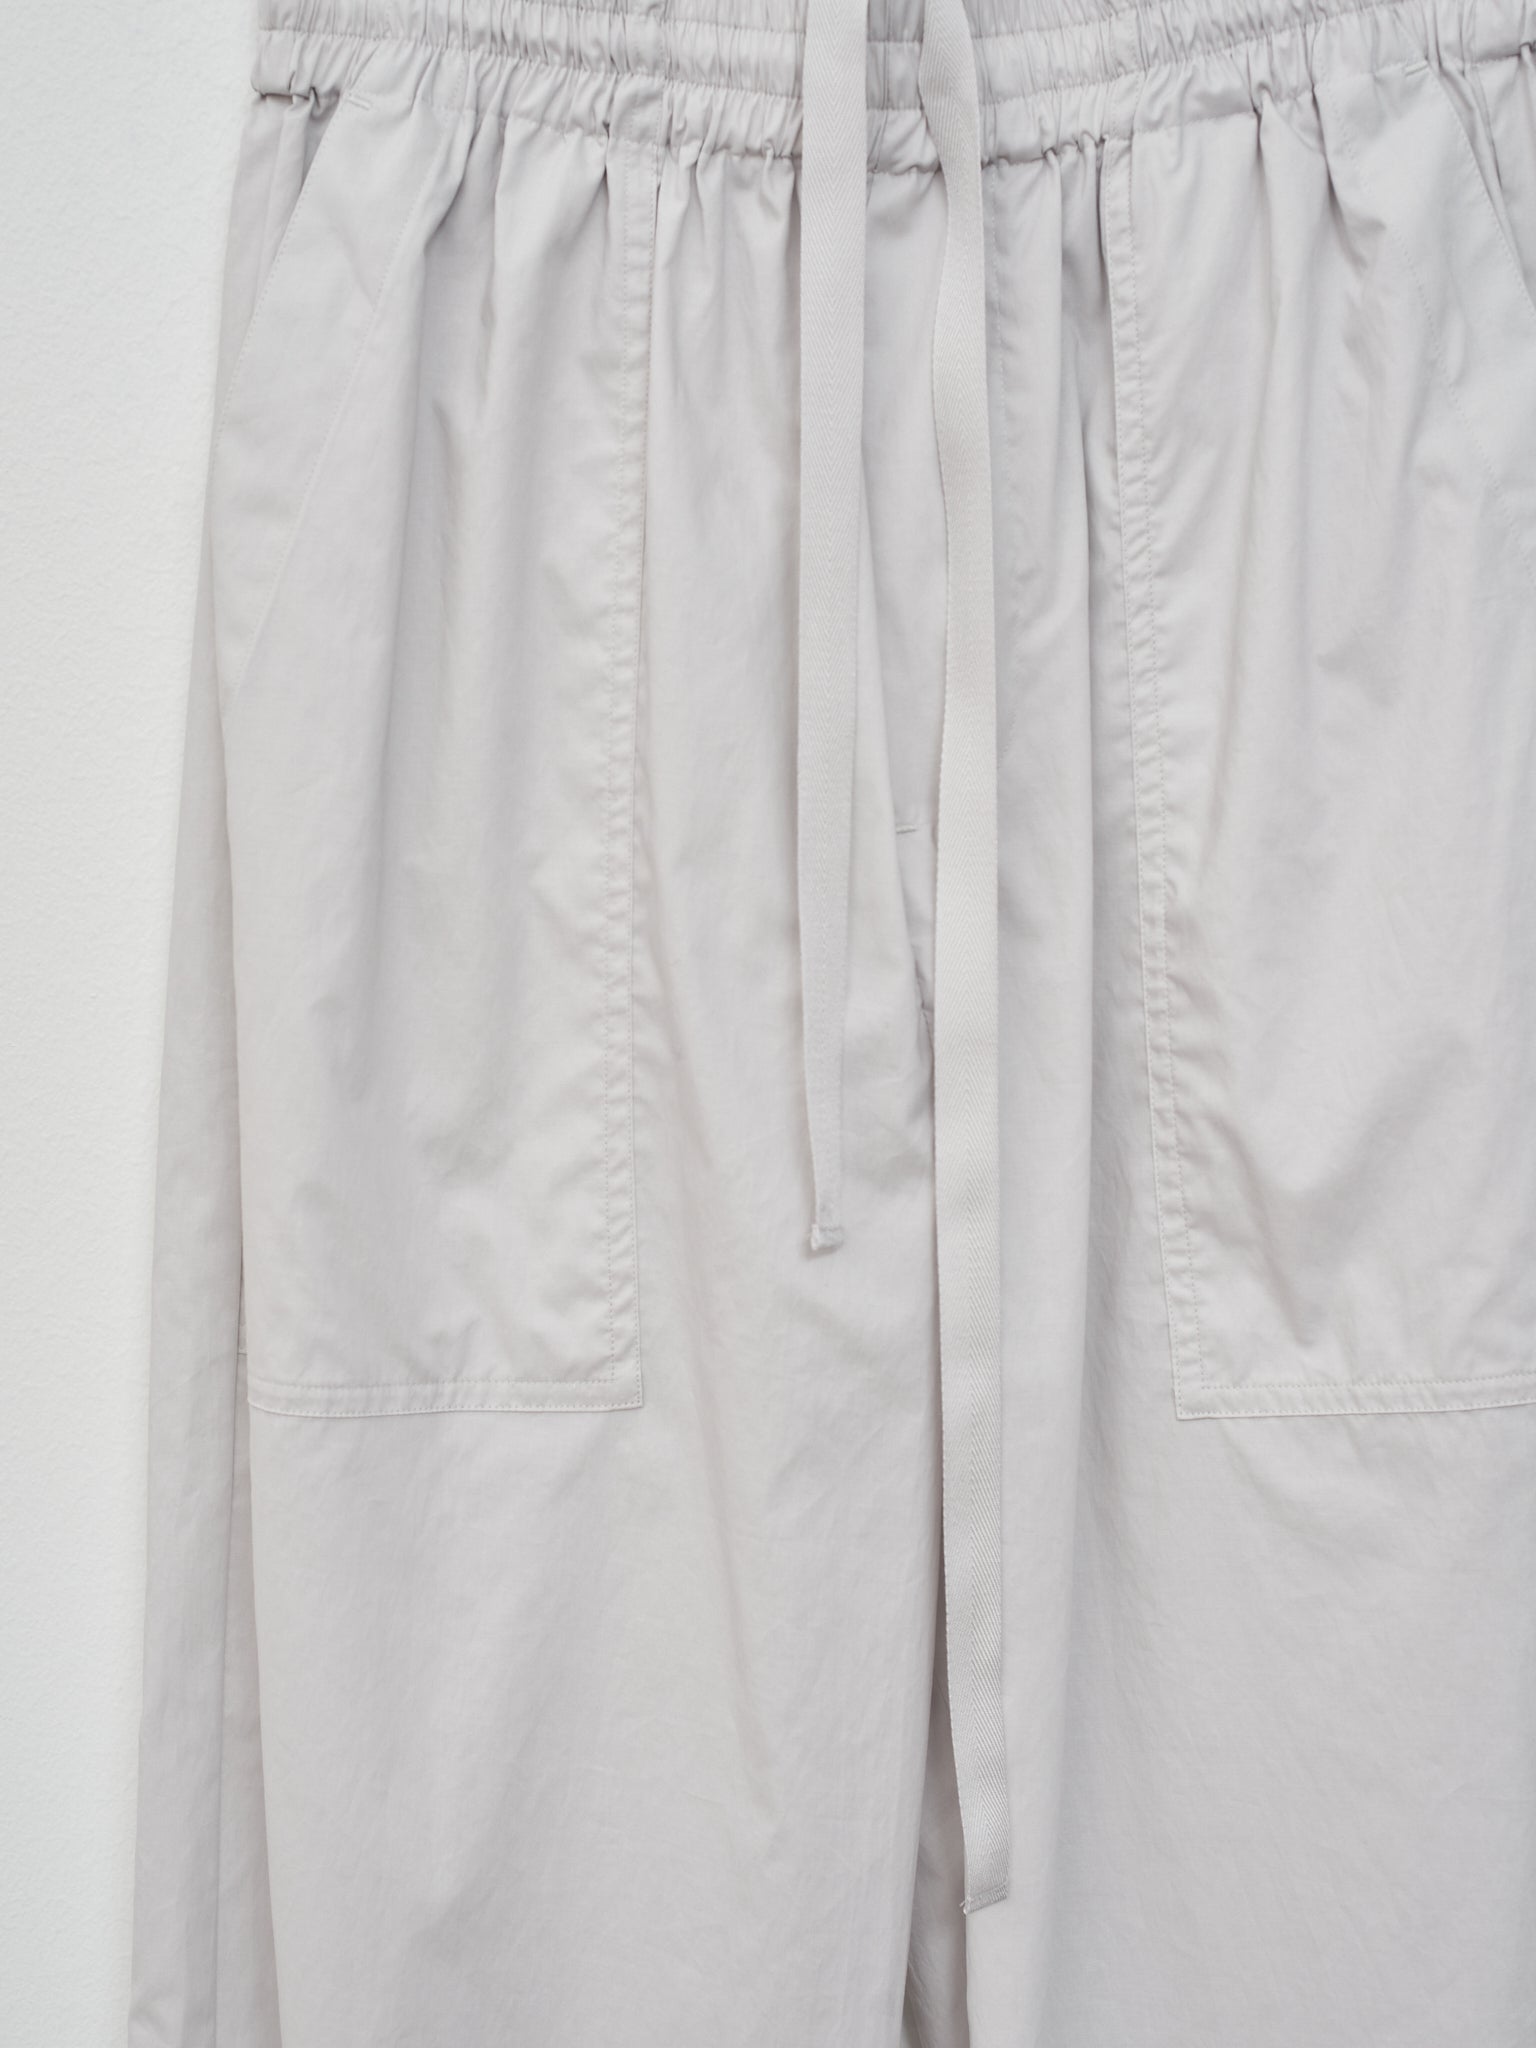 Namu Shop - Nicholson & Nicholson Harby Poplin Trouser - Light Gray